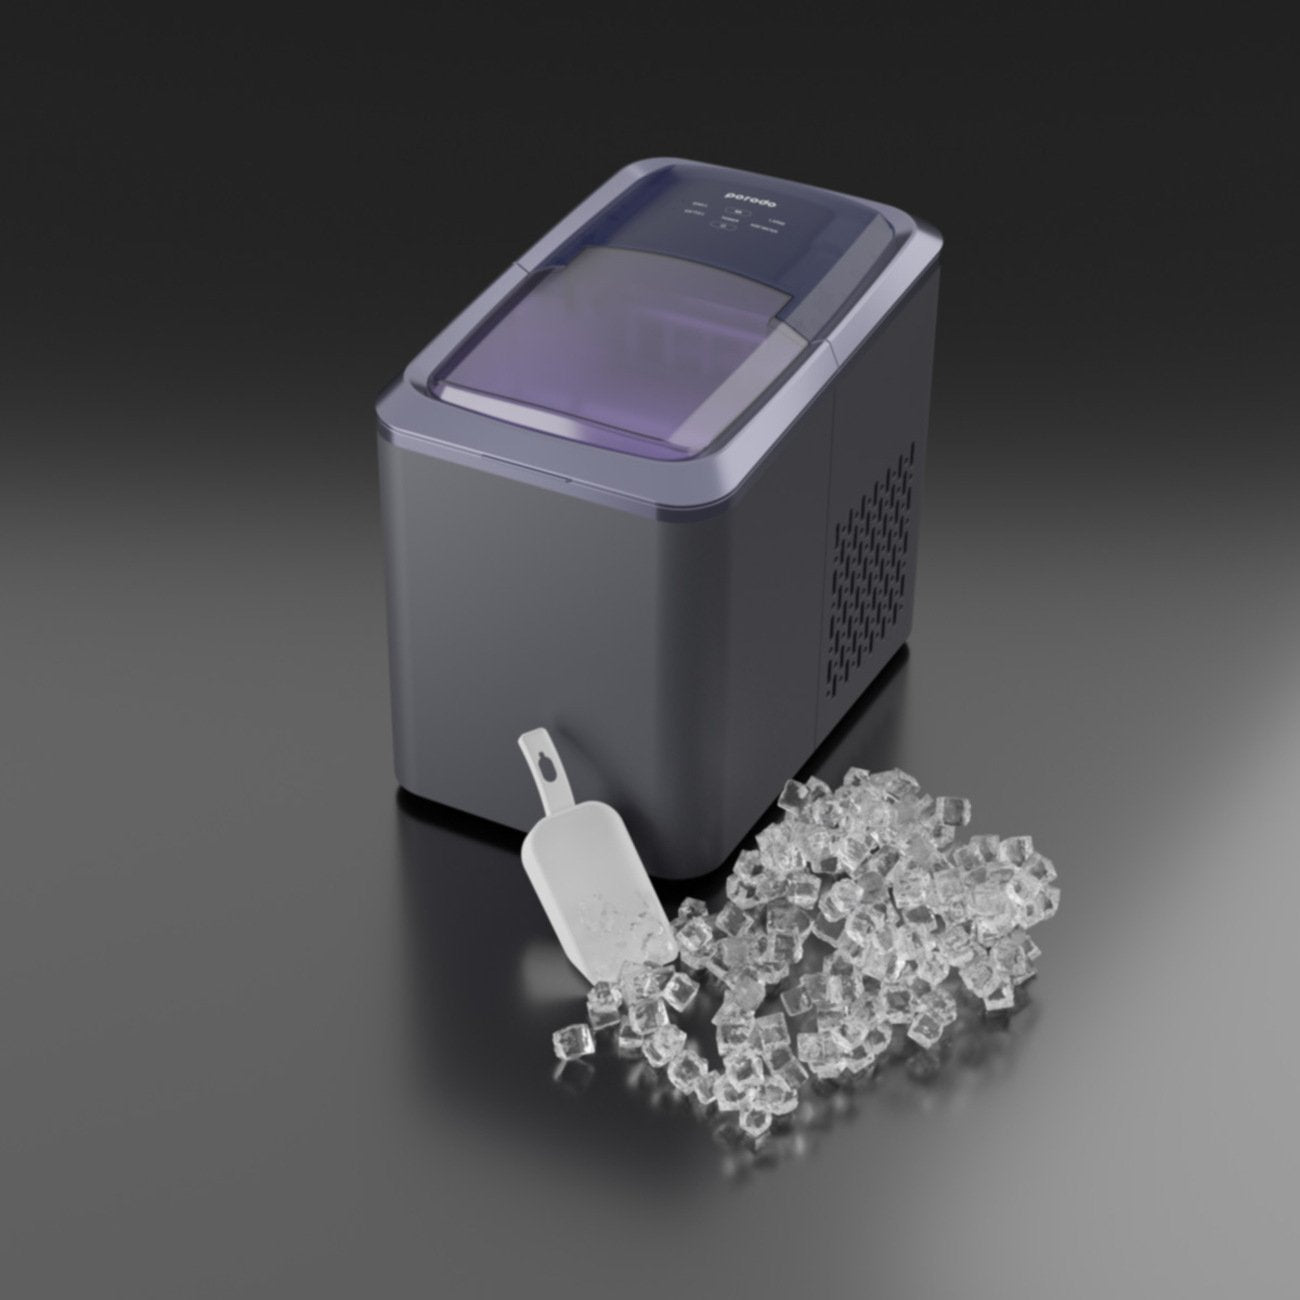 Porodo Ice Machine / Provides 12 Kilograms of Ice Every Day